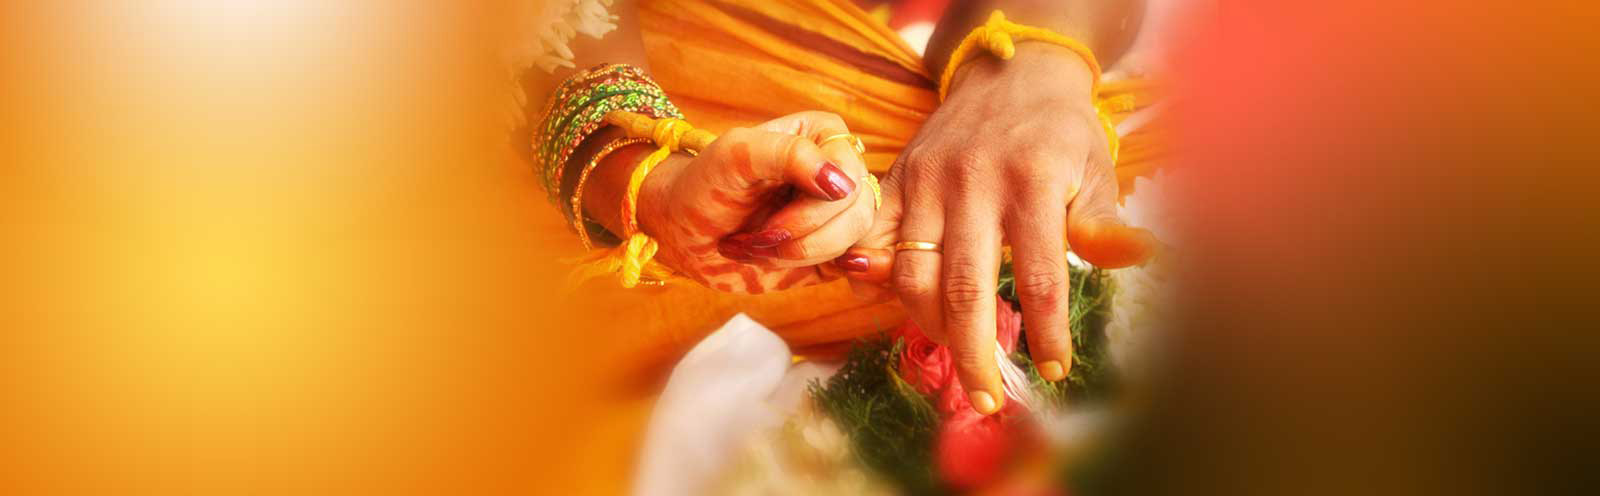 Thodu Needa Telugu Matrimony